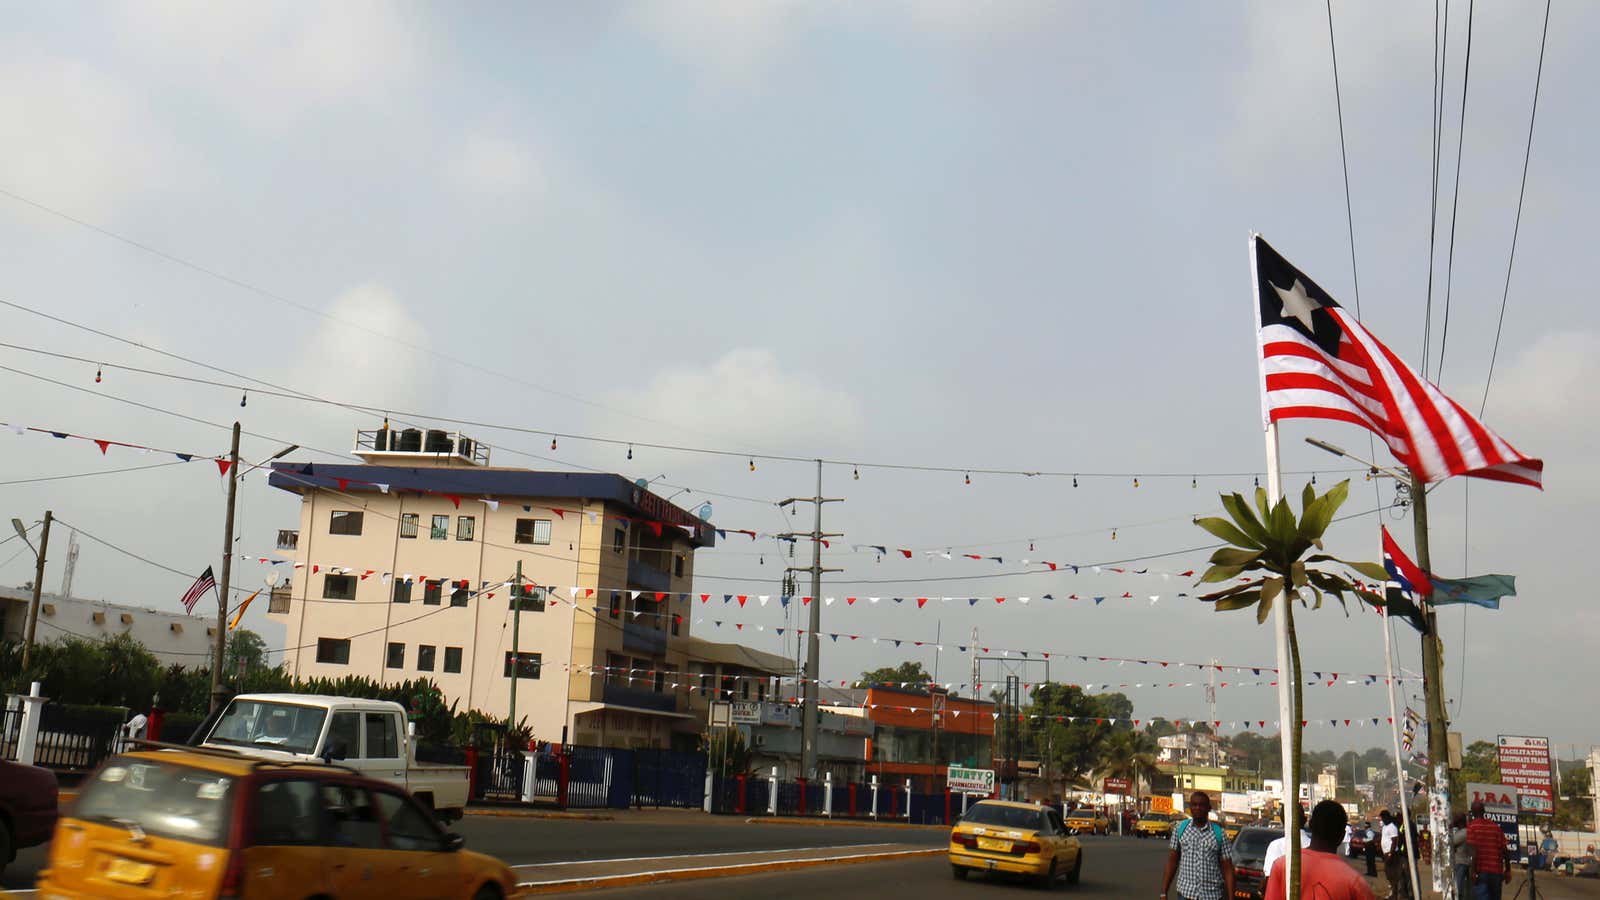 Monorovia, Liberia